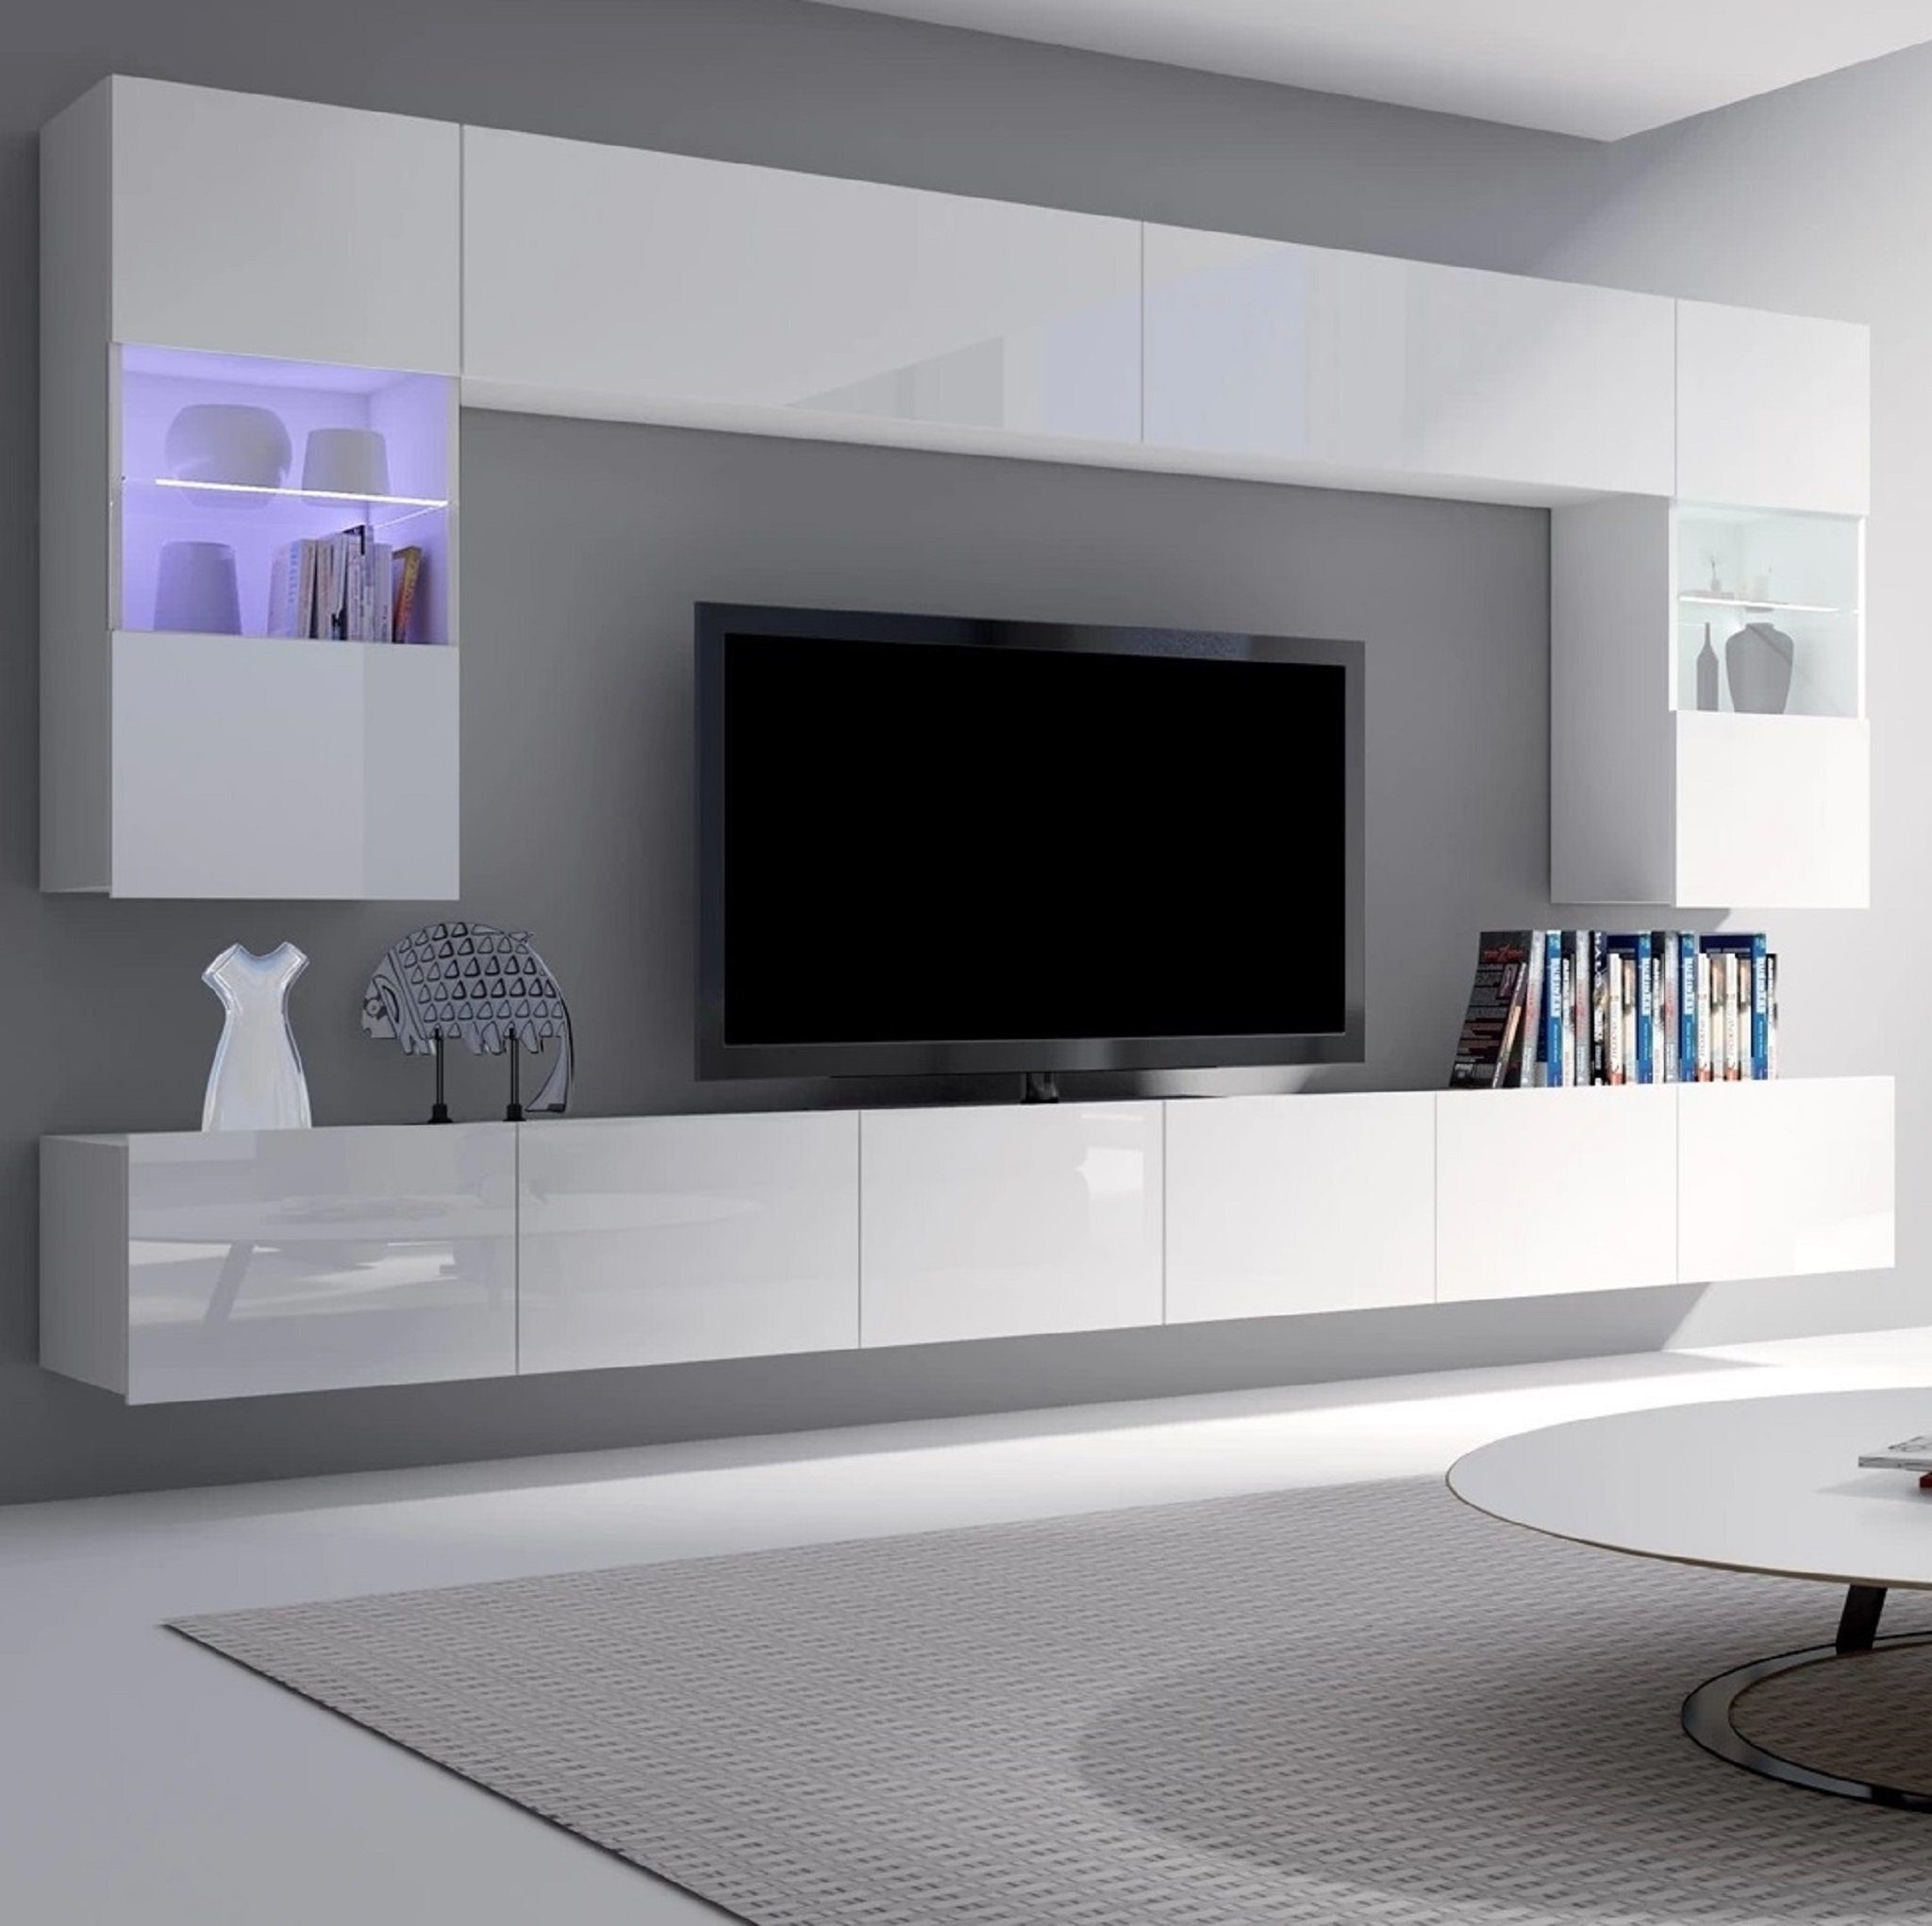 Furnix TV-Wand PUNE 1 Mediawand Möbelwand Wohnwand 6-teilig Farbauswahl, geräumig, 300 cm breit Weiß Glanz